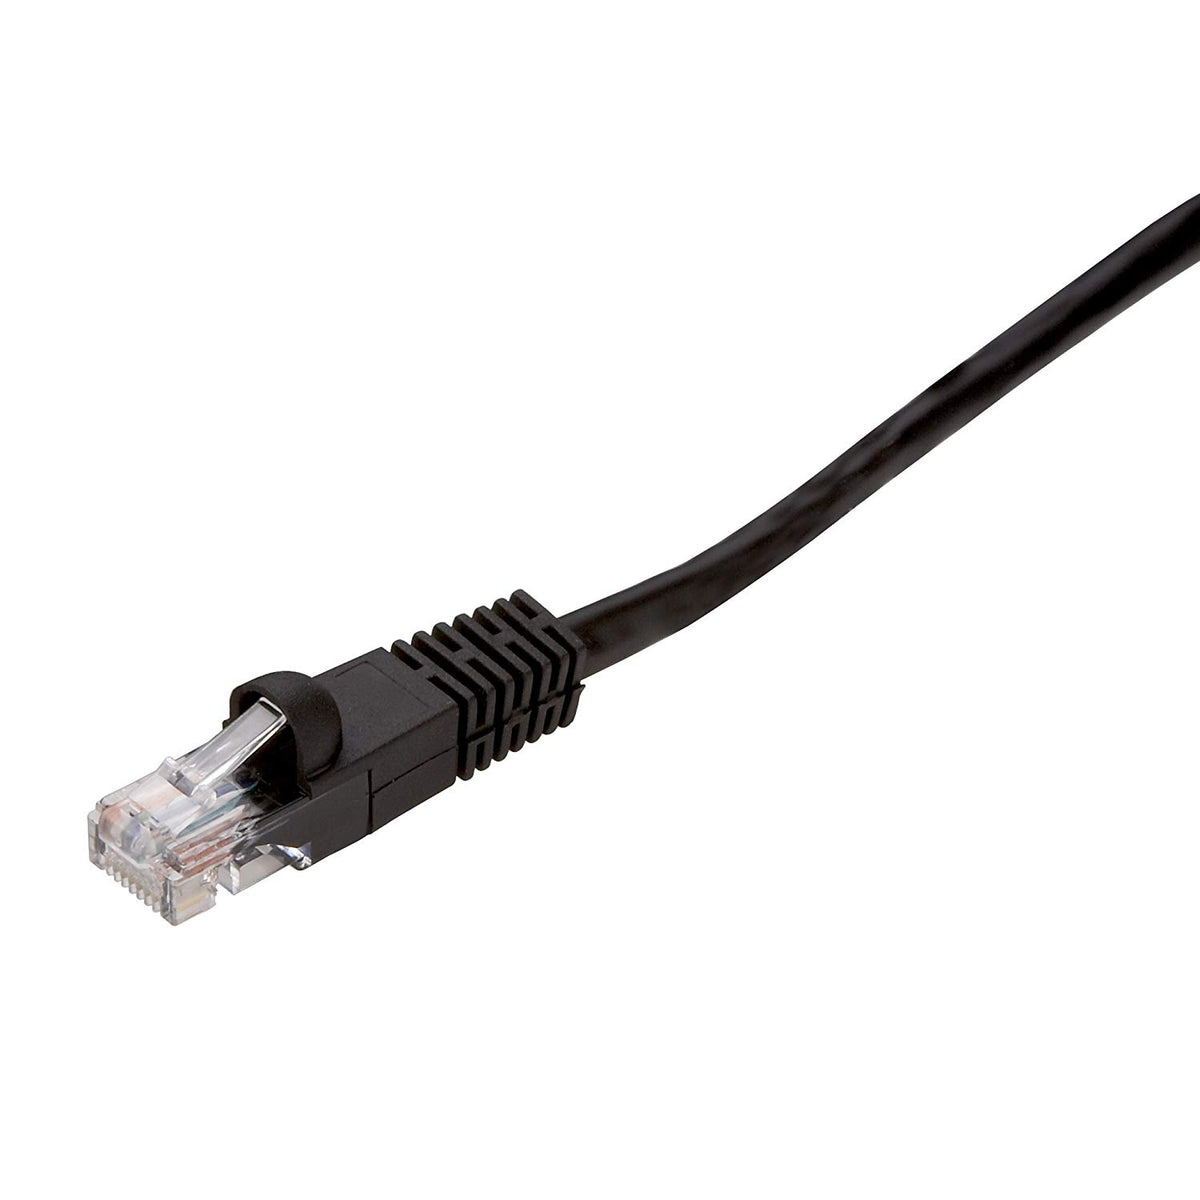 AmerTac PN10156EB CAT-6 Network Cable, Black, 14' L